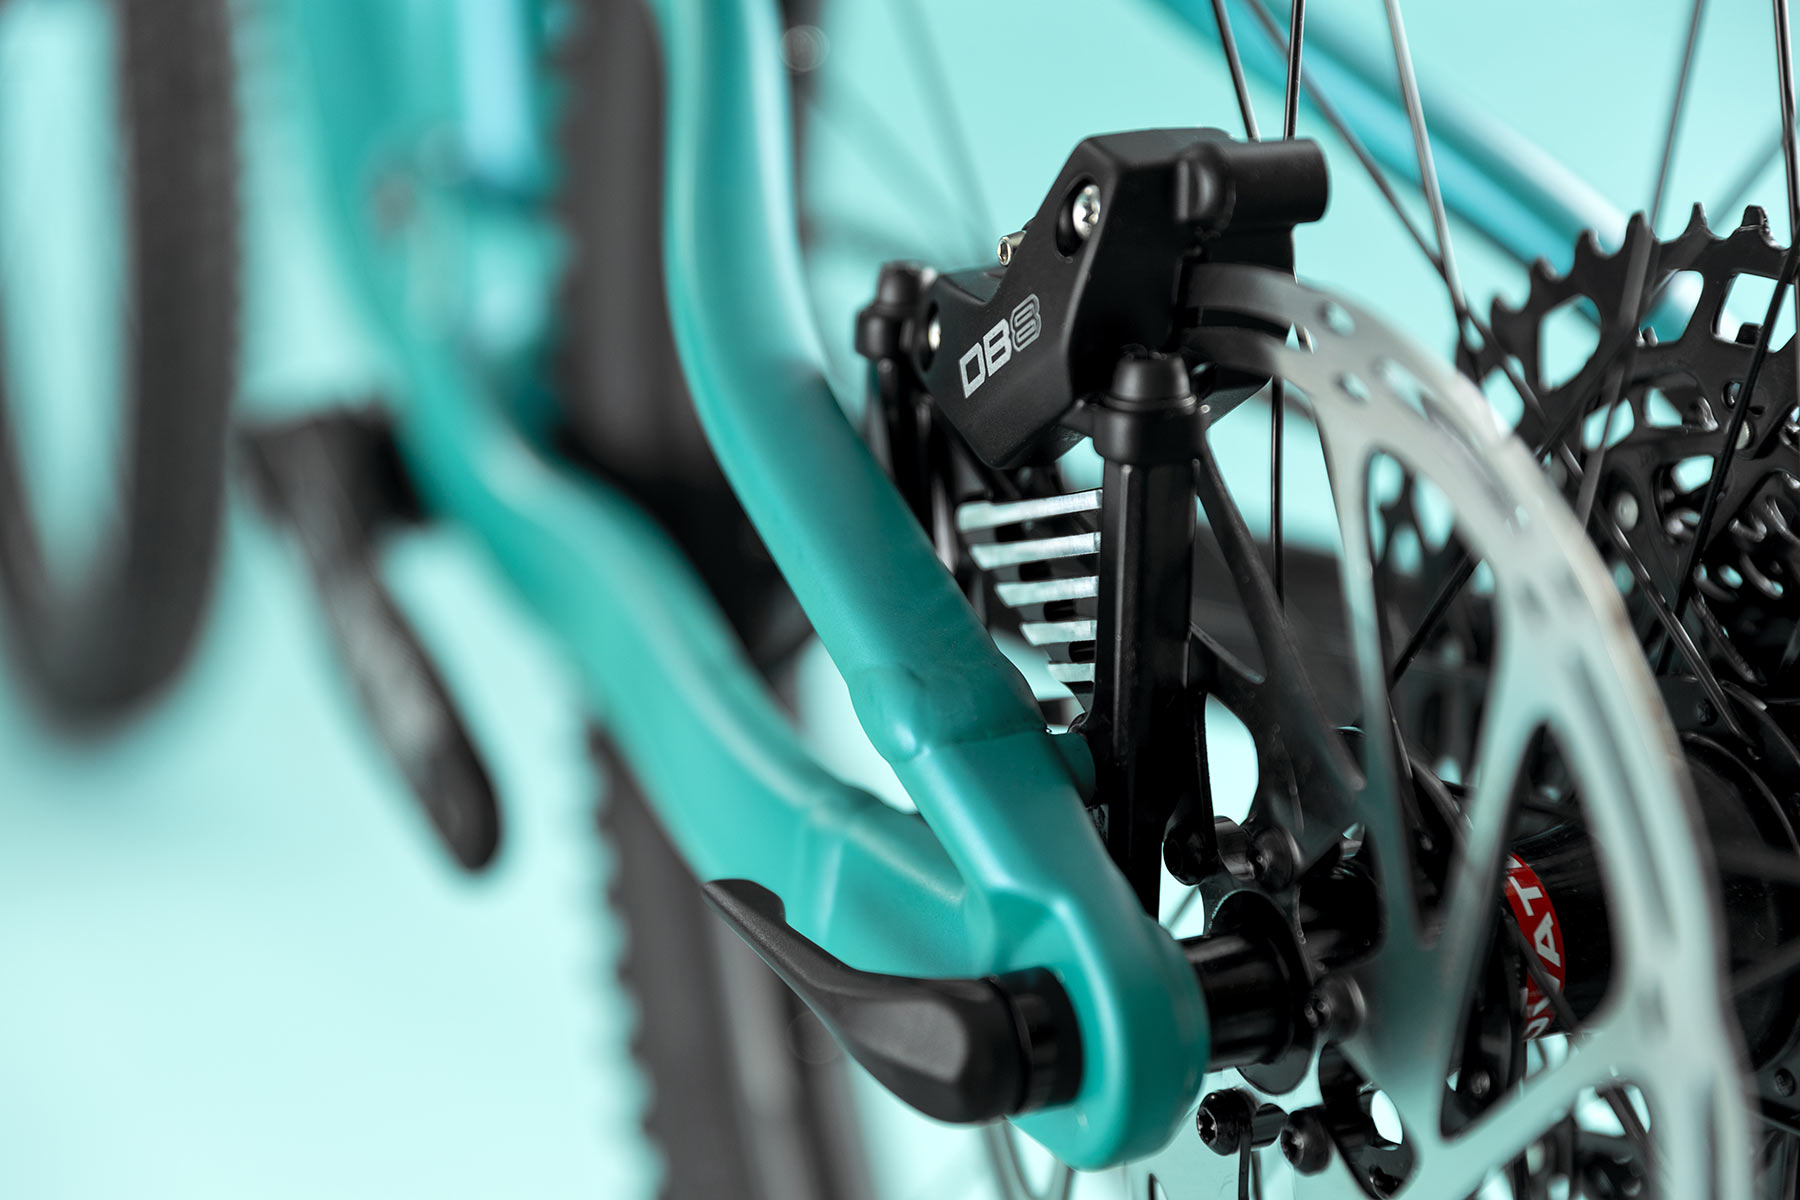 Merida One-Twenty, affordable 130mm aluminum alloy Lite trail mountain bike details, rear brake cooling fins